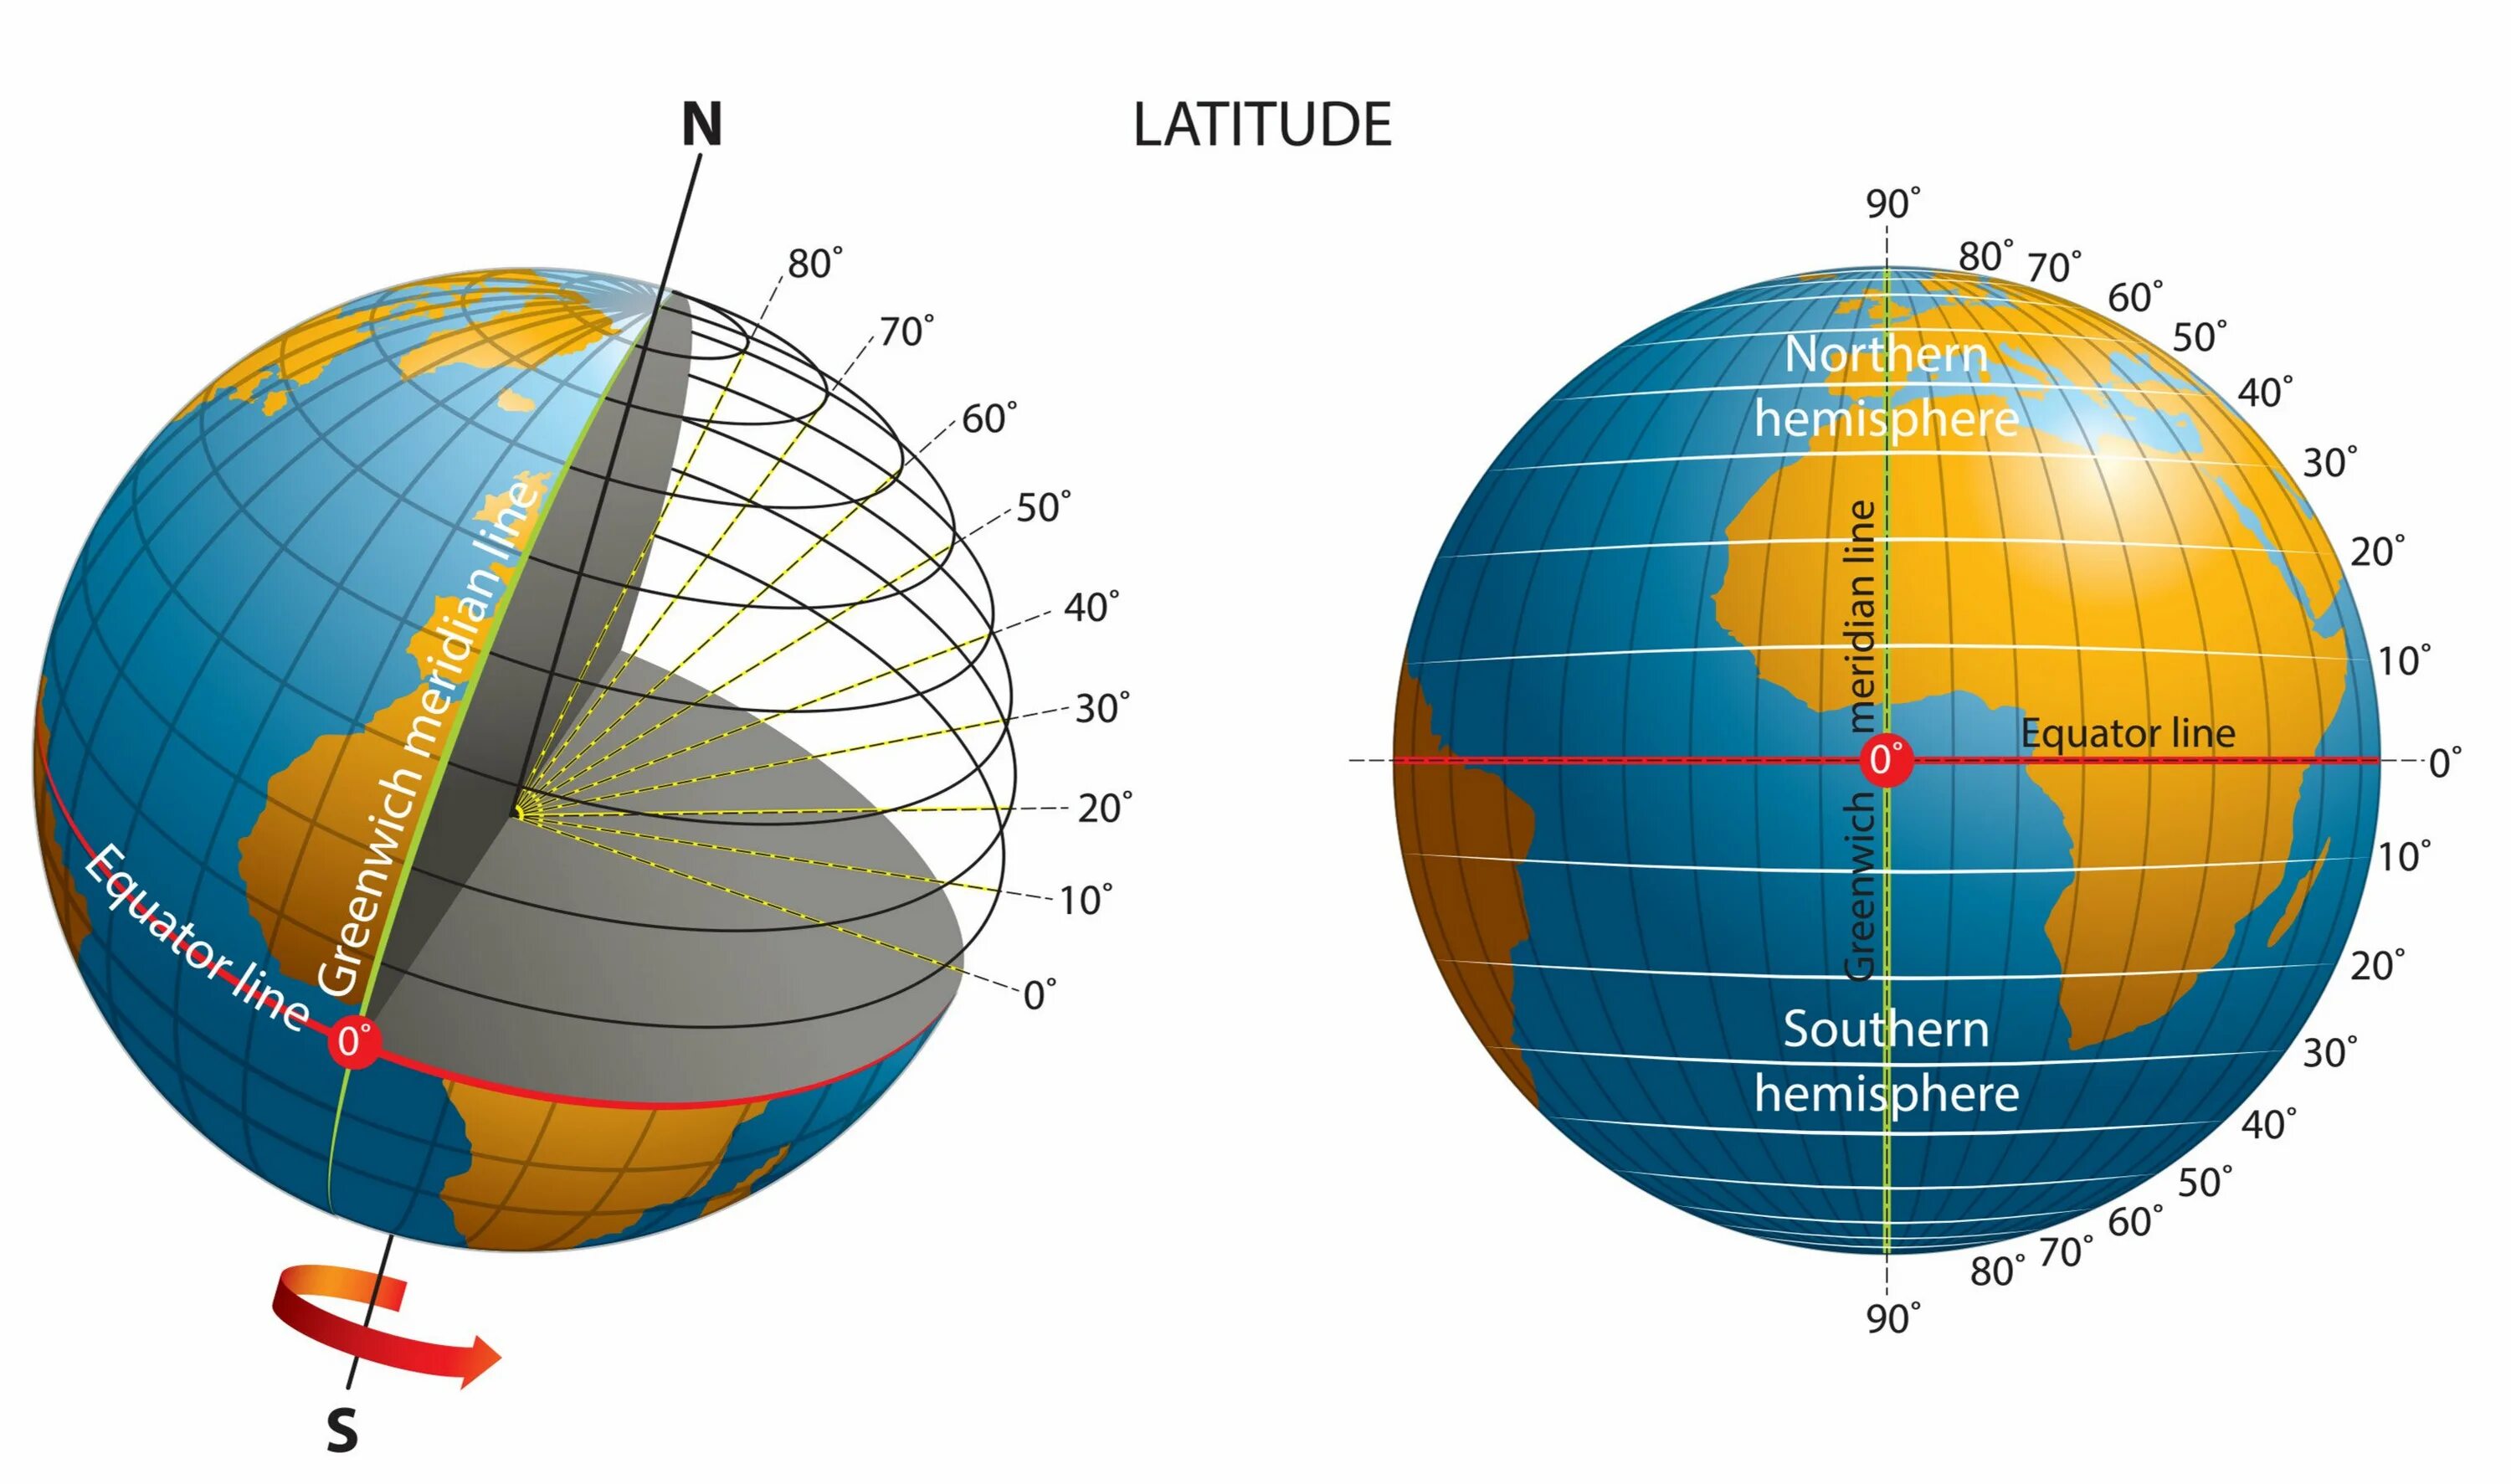 Долгота на земном шаре. Latitude широта. Широты планеты. Ширина и долгота на глобусе. Latitude b Longitude.